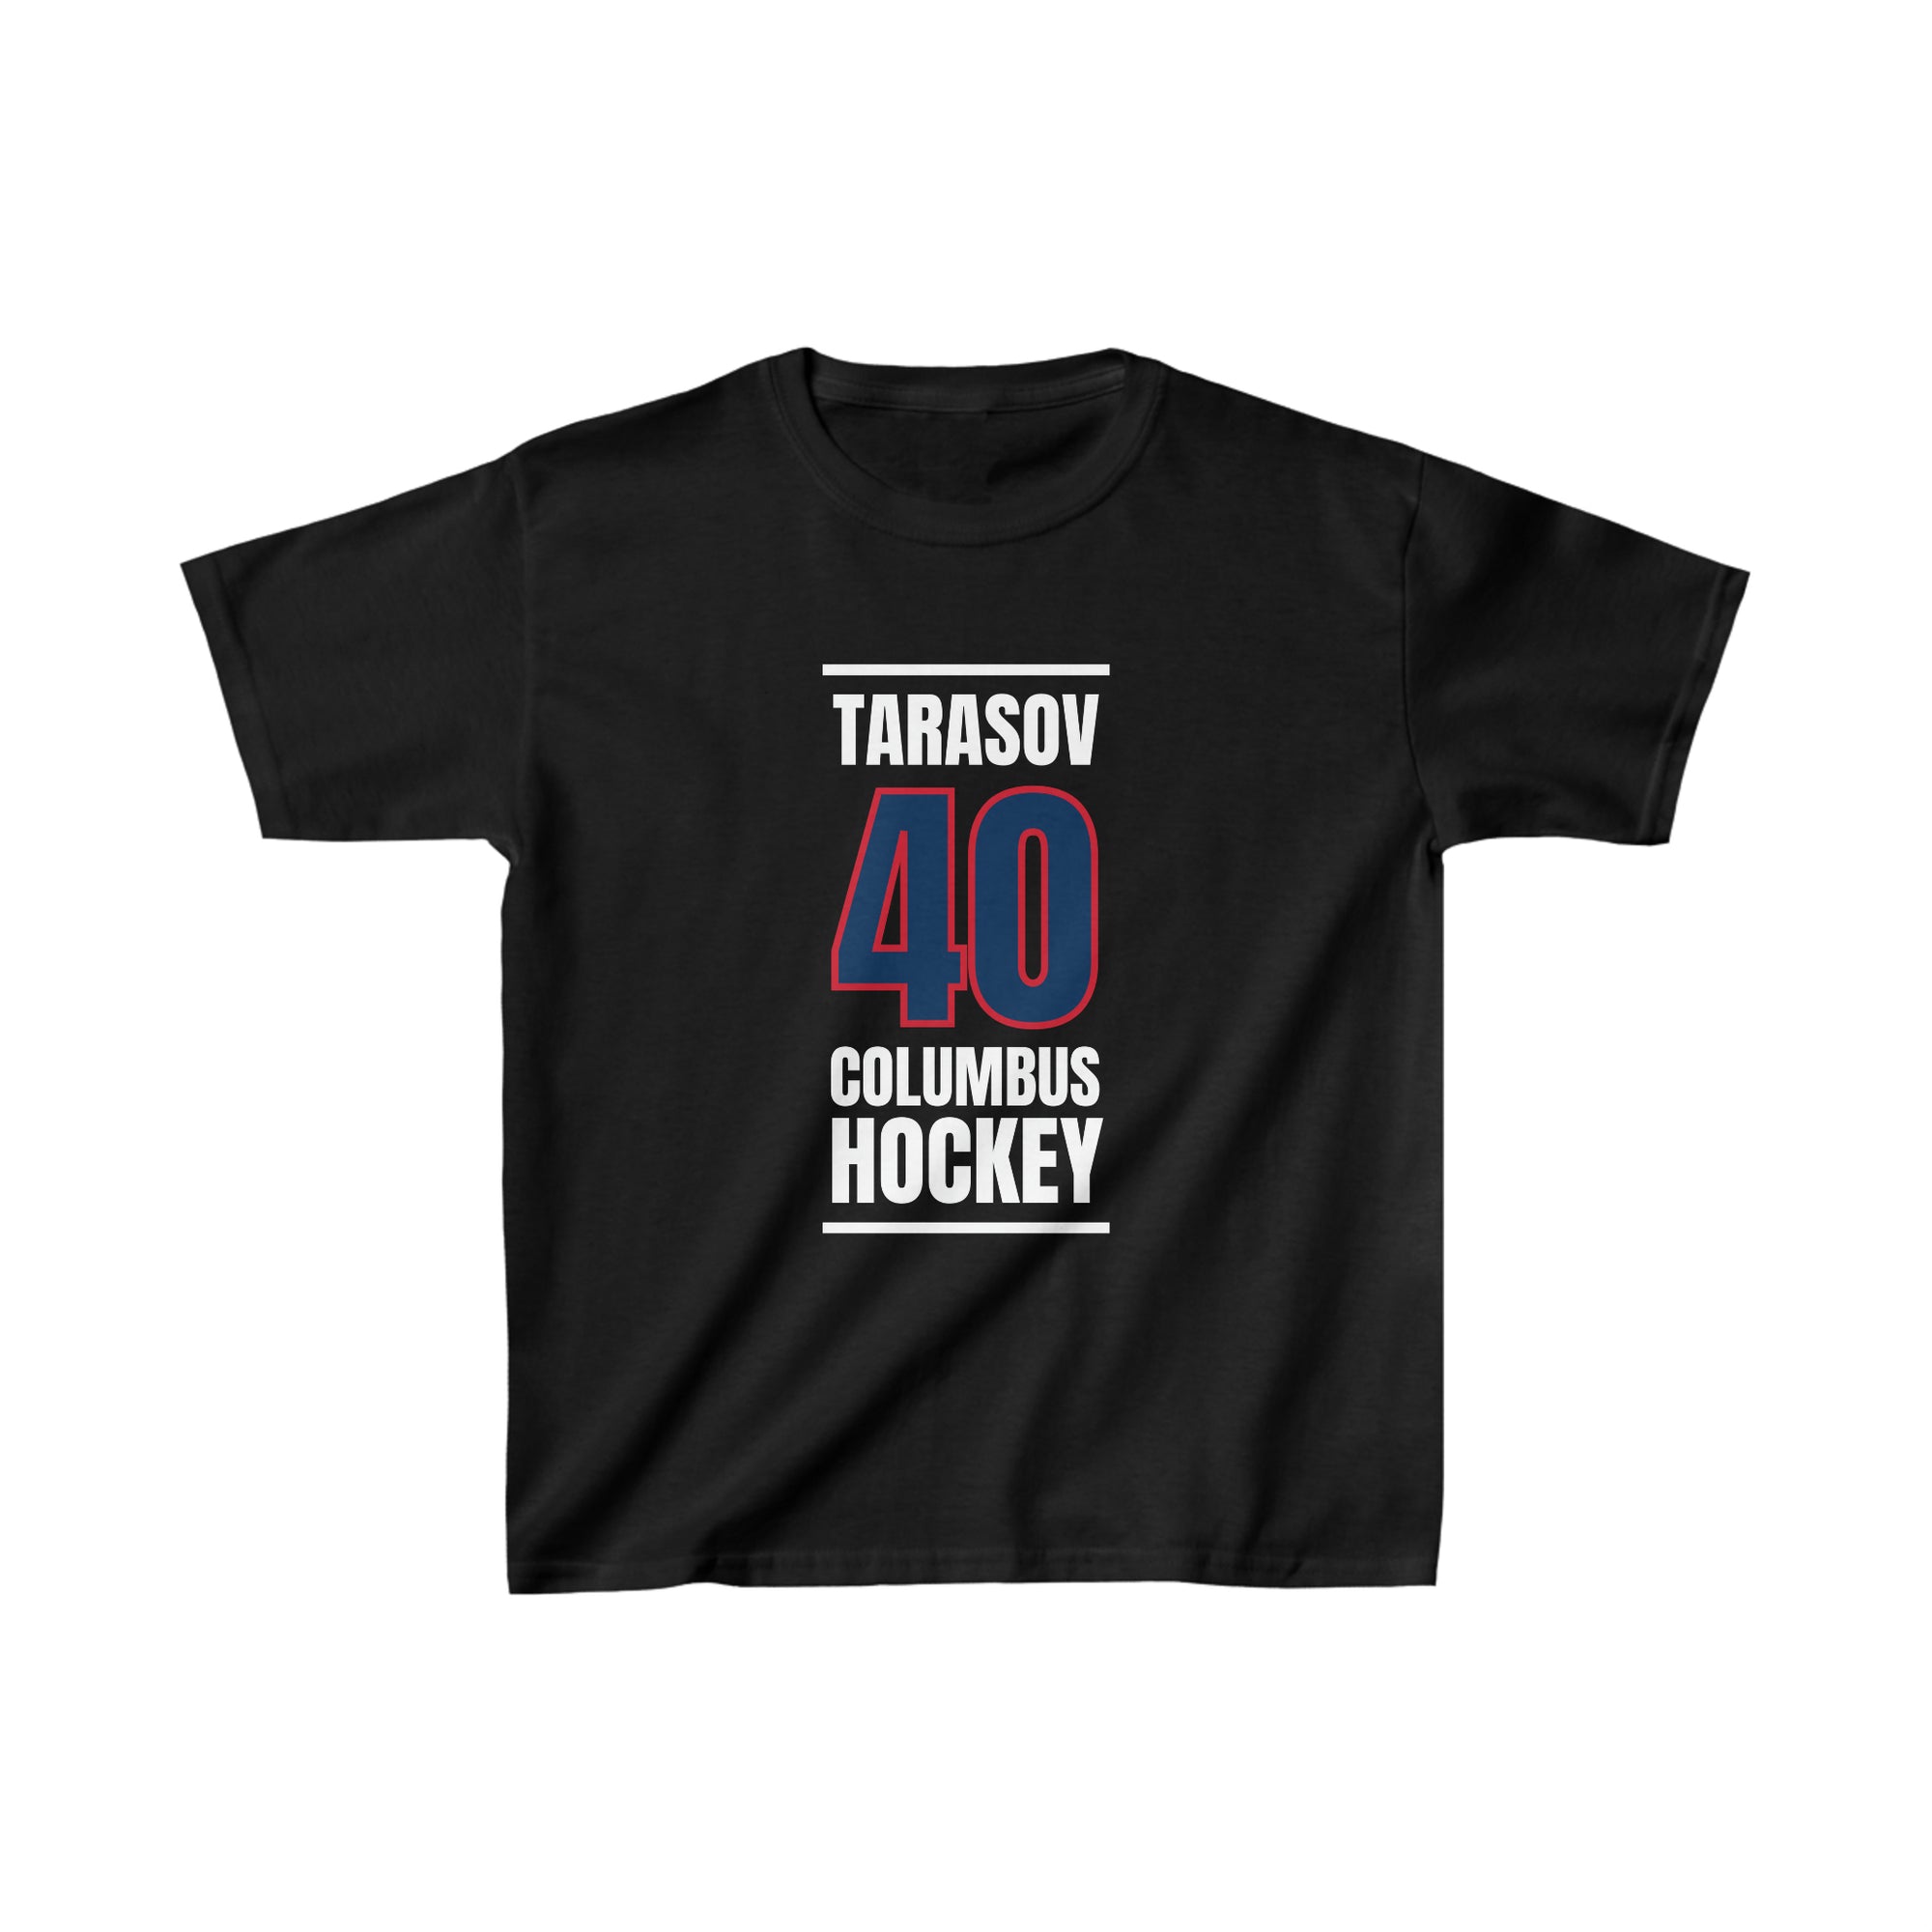 Tarasov 40 Columbus Hockey Union Blue Vertical Design Kids Tee